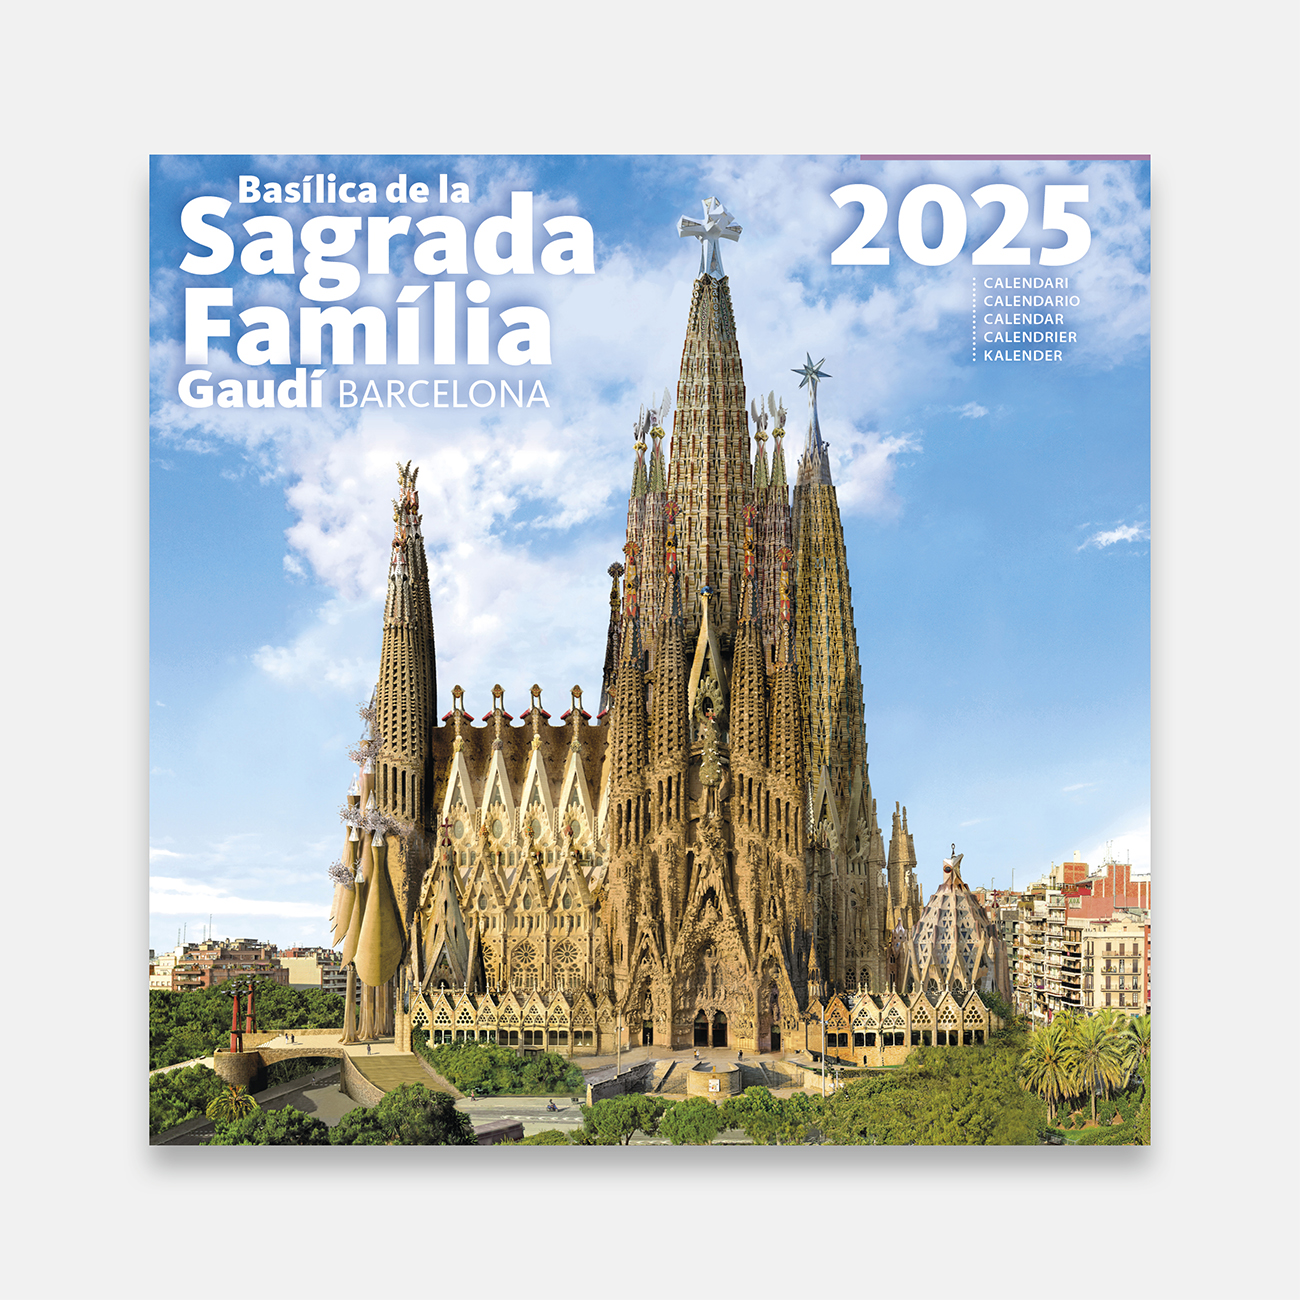 Calendar 2025 Basílica de la Sagrada Família 25sf1 calendario pared 2025 sagrada familia